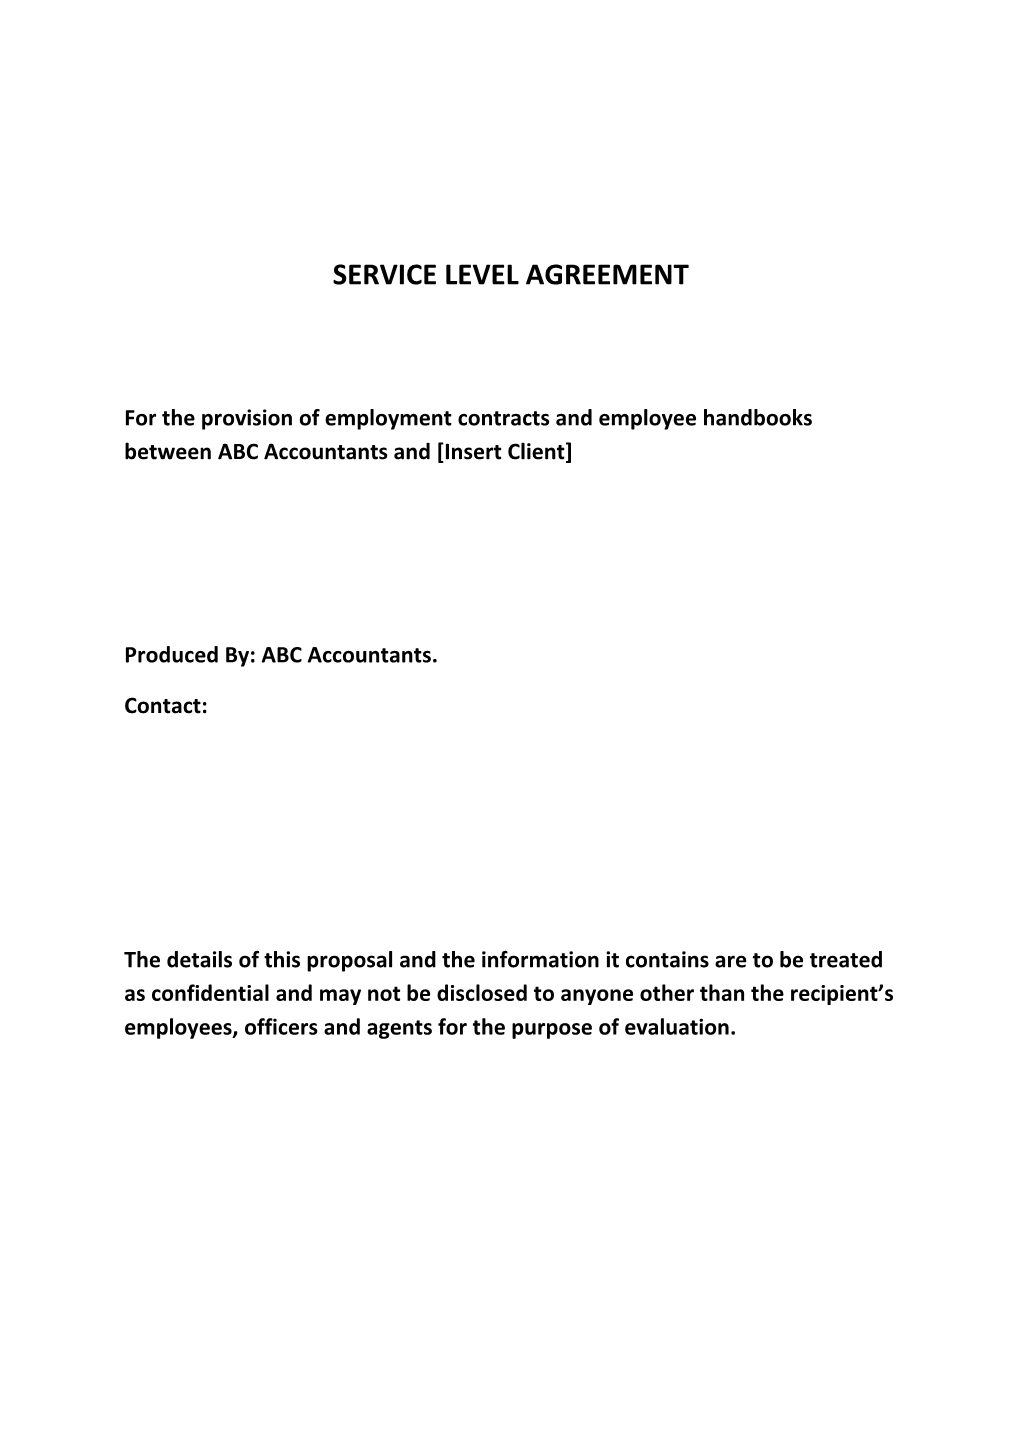 Service Level Agreement s1